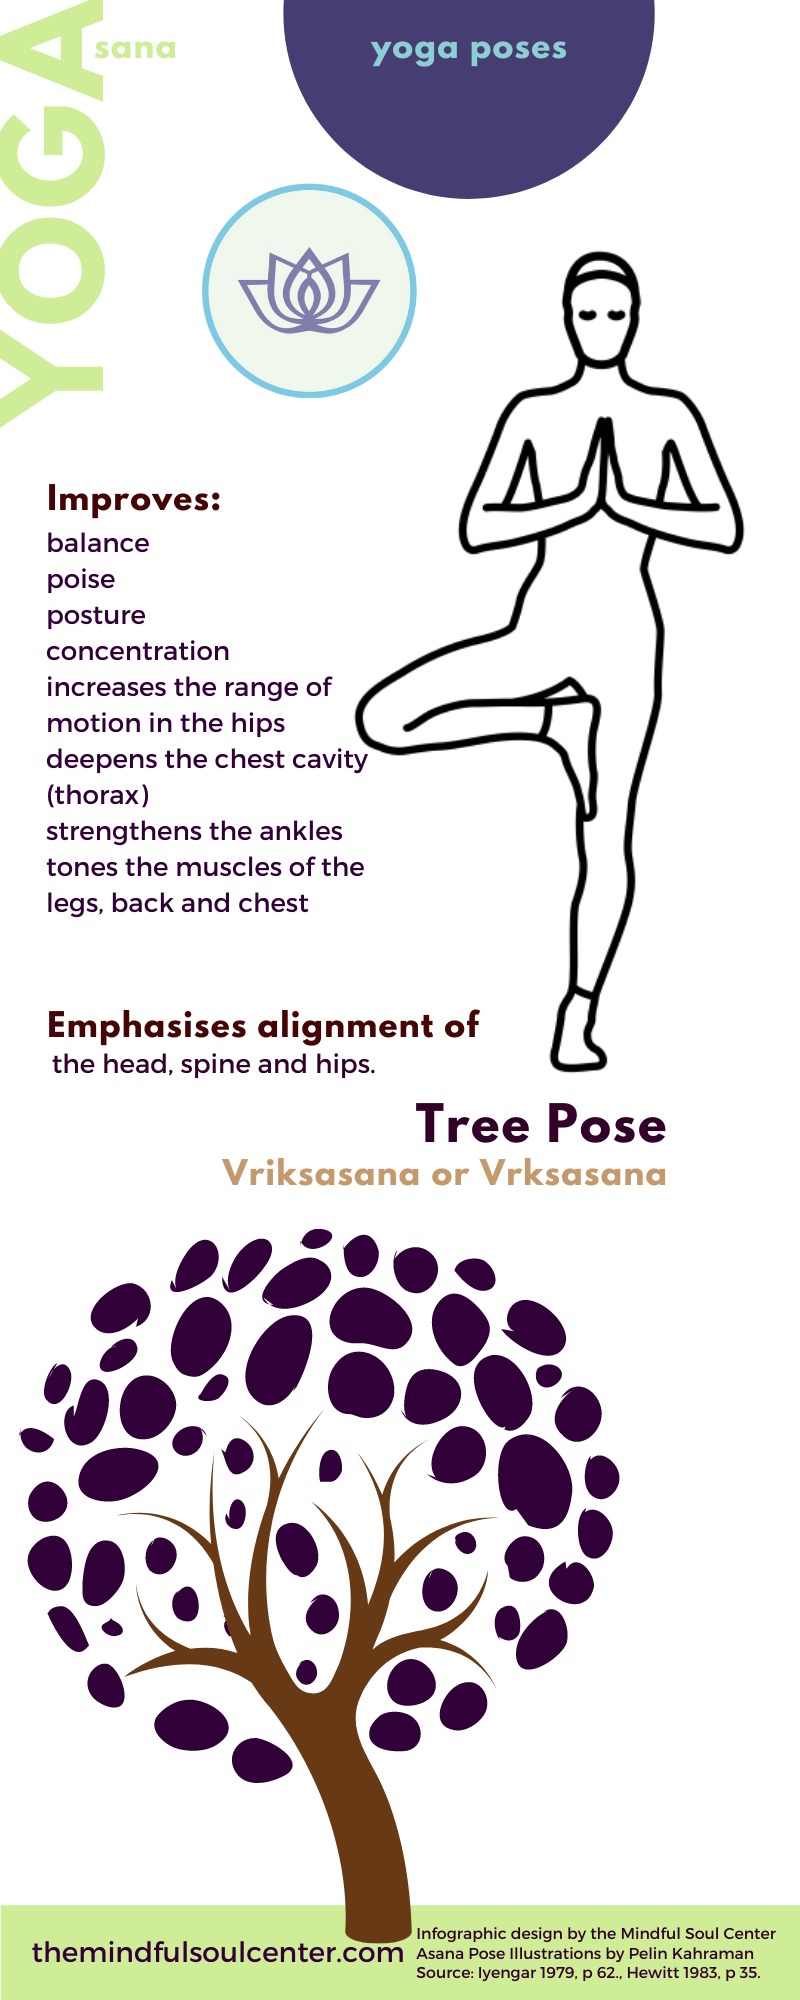 Mindful Soul Center Yoga Pose Infographic for Vrikasana aka Tree Pose